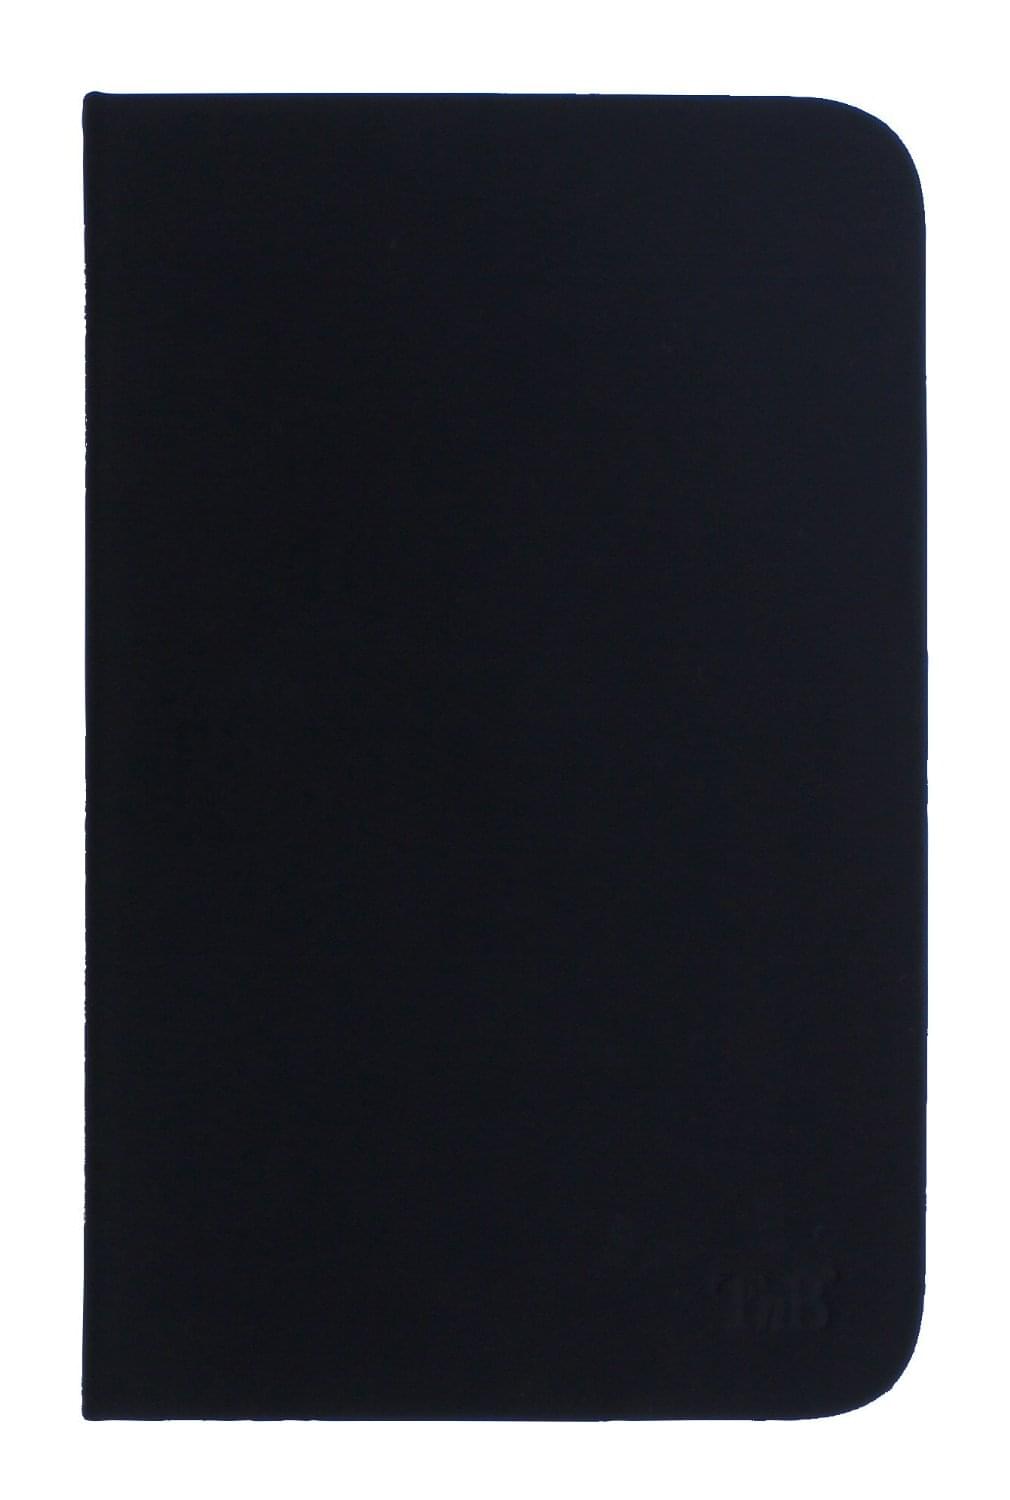 Etui Folio Galaxy Tab 3 10" Noir - Accessoire tablette T'nB - 0